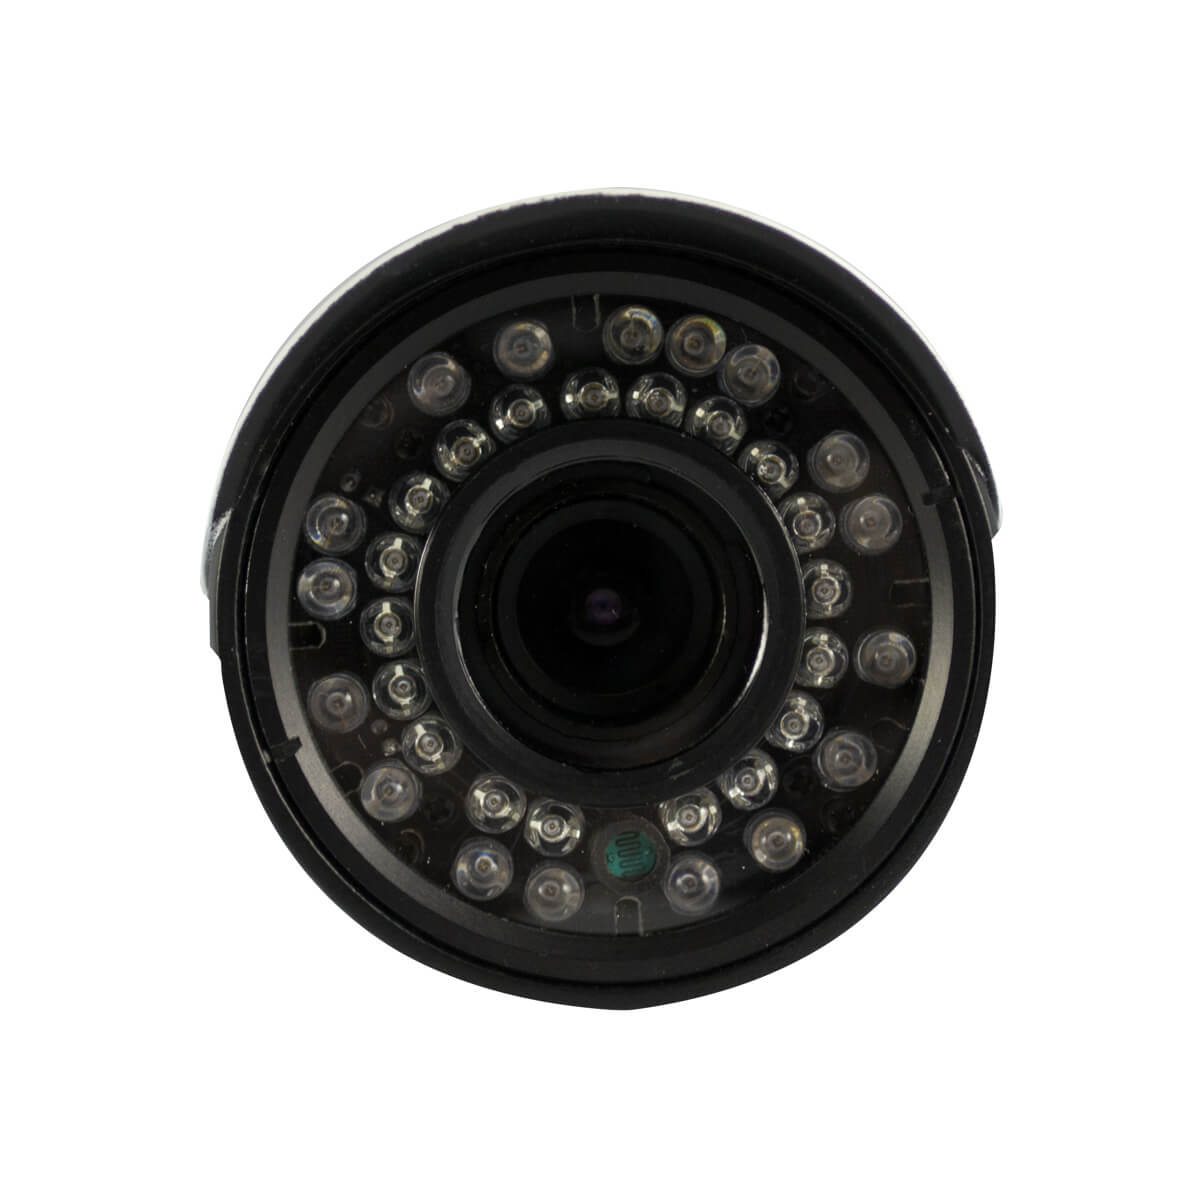 Camara tipo bazuca, Sensor CCD Sony 1/3, 700TVL, 36 LEDs, 30m IR, IP66